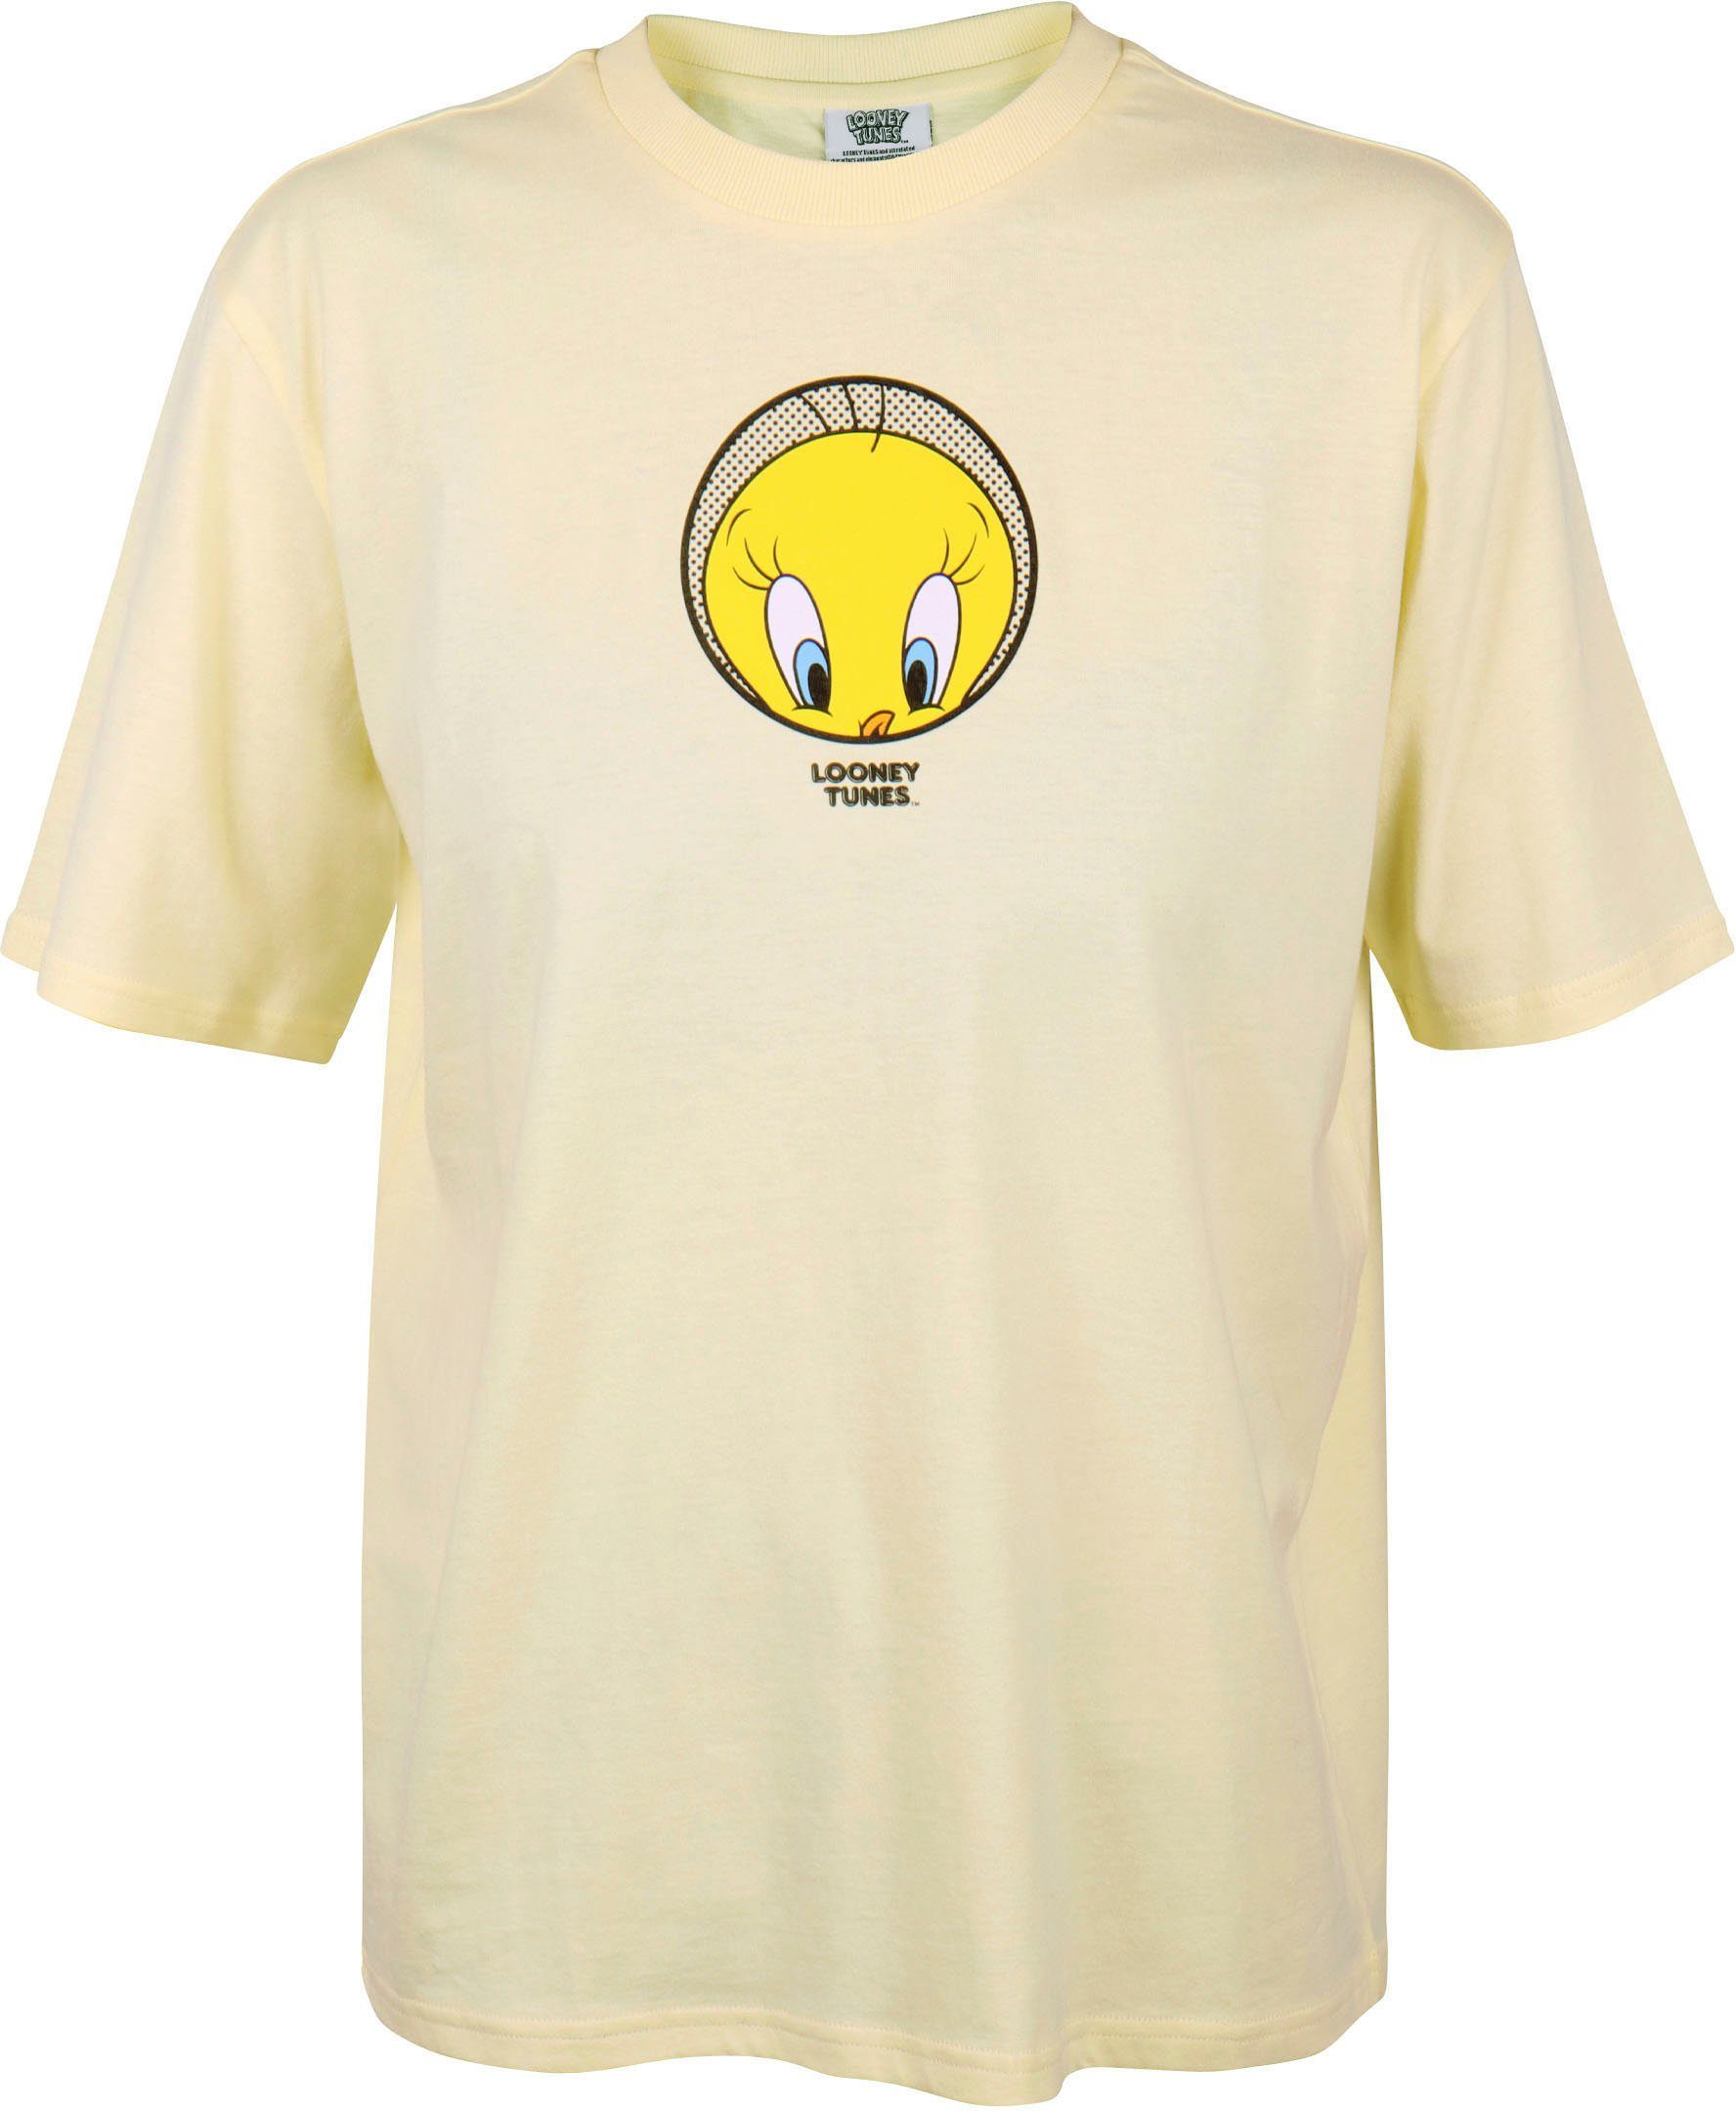 spottbillig verkaufen Capelli New York T-Shirt Vanilla T-Shirt Tweety